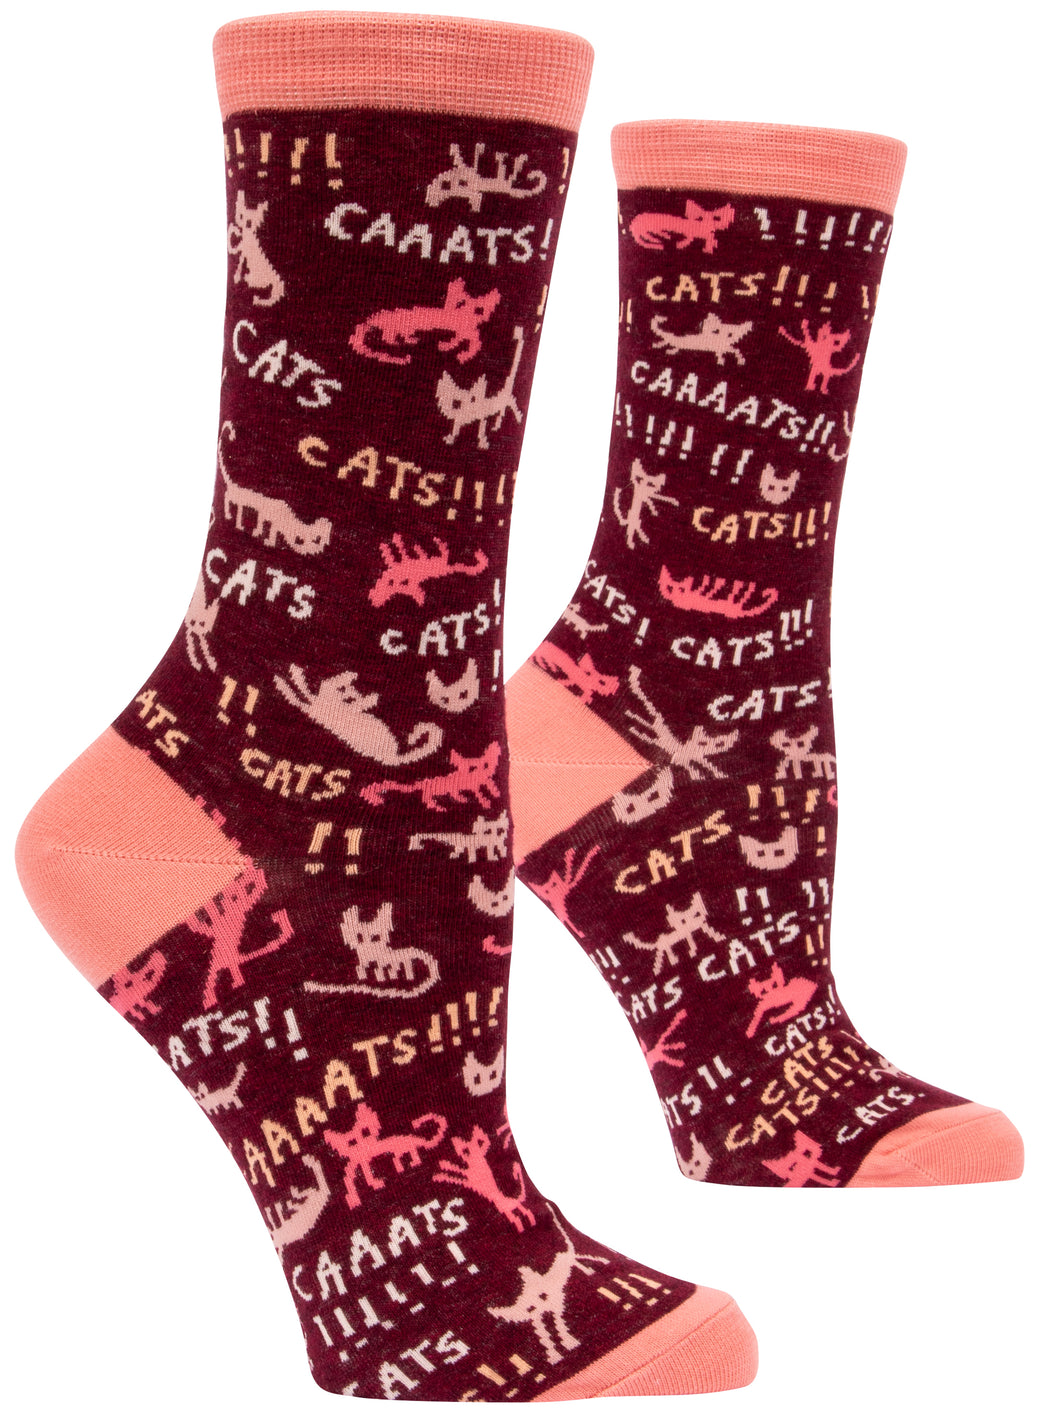 Cats! - Women's Crew Socks